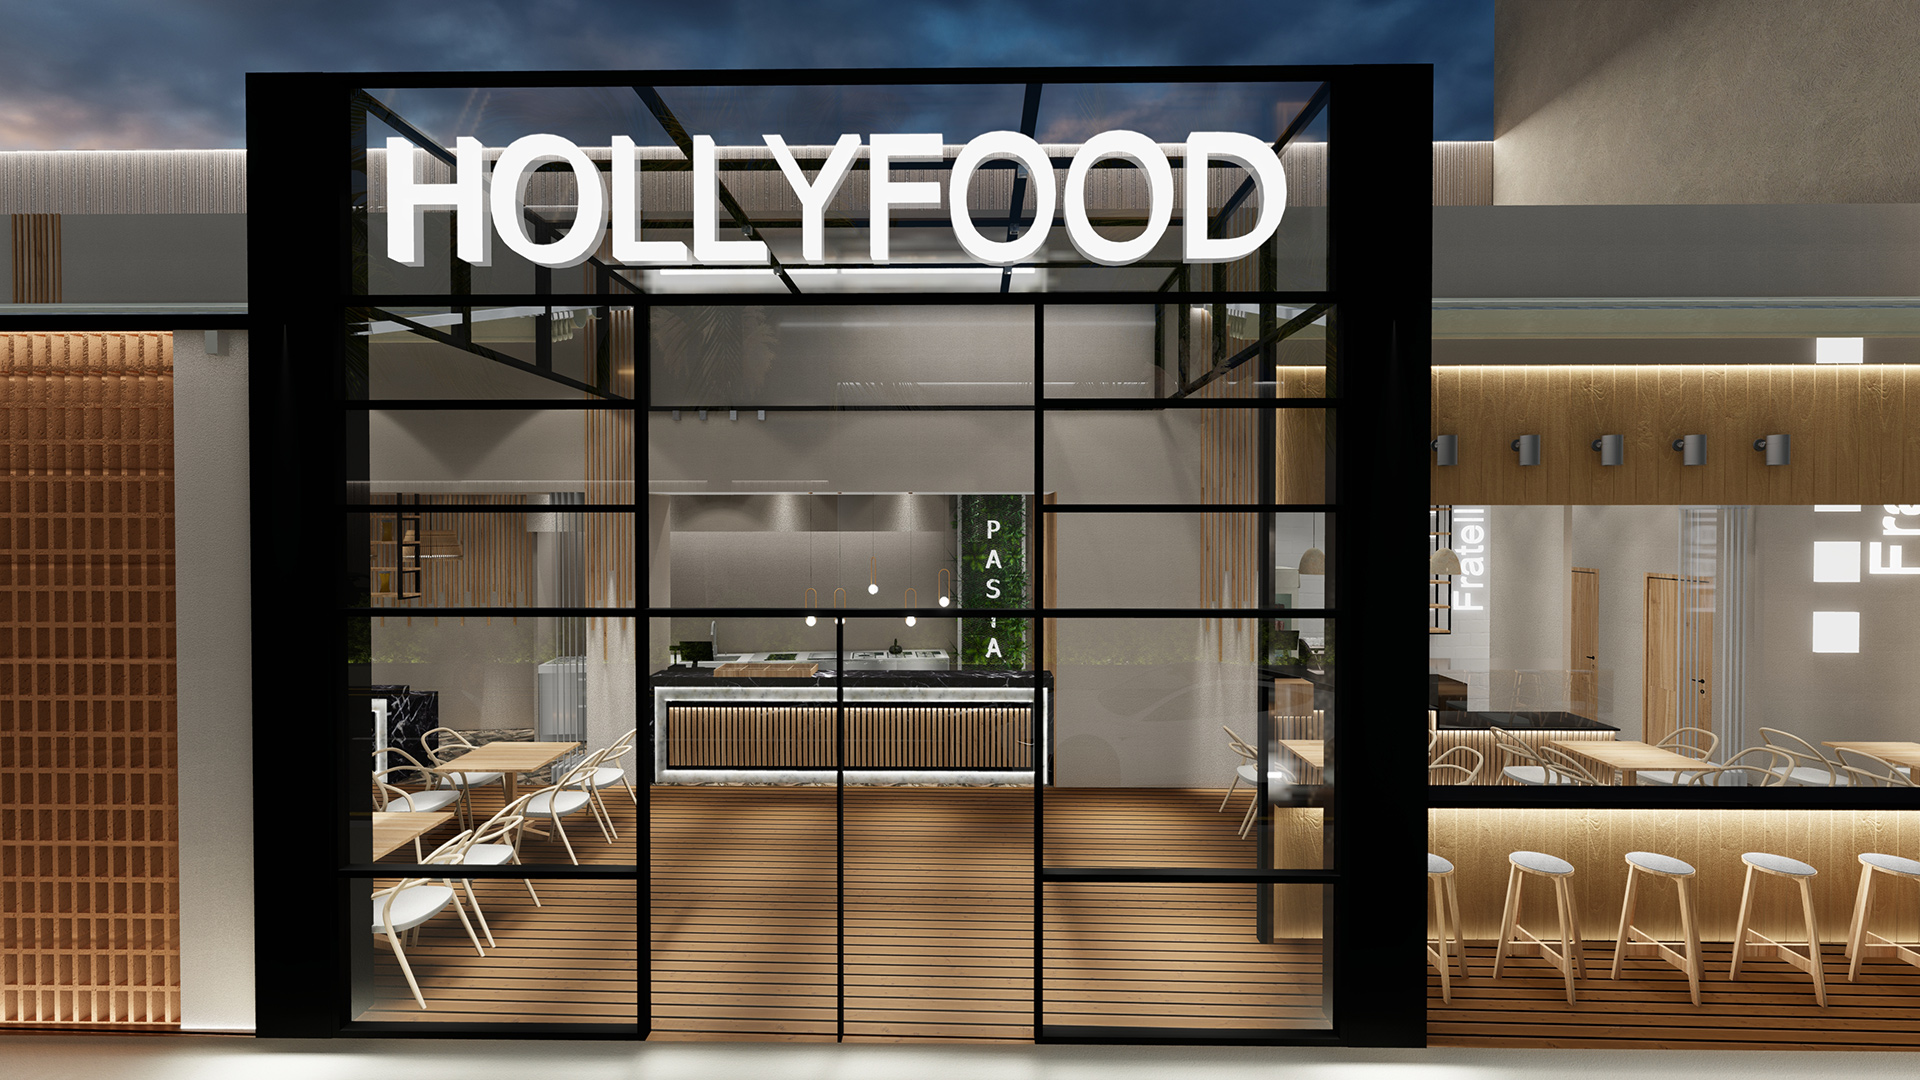 Hollyfood - Art Deco Chania